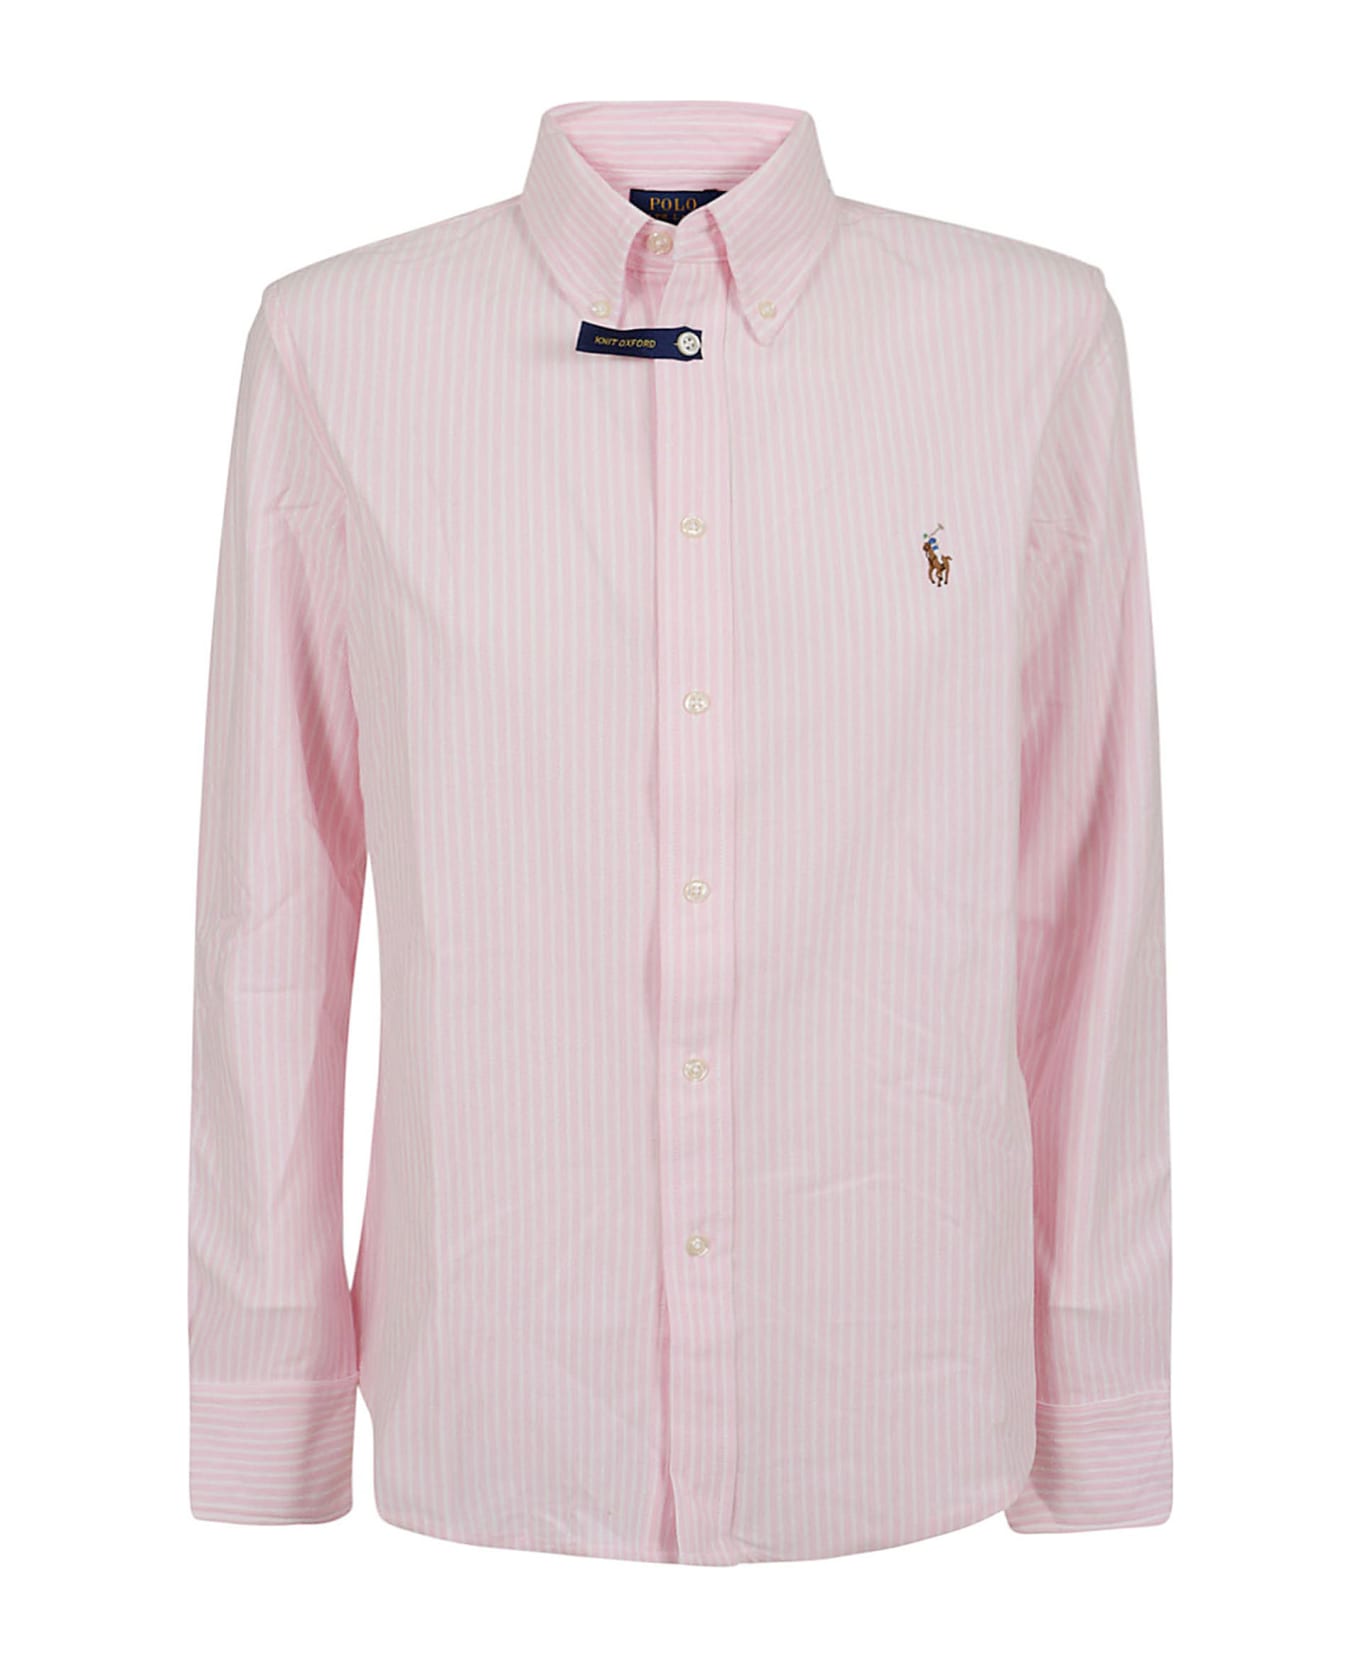 Polo Ralph Lauren Striped Long-sleeved Shirt - Carmel Pink White